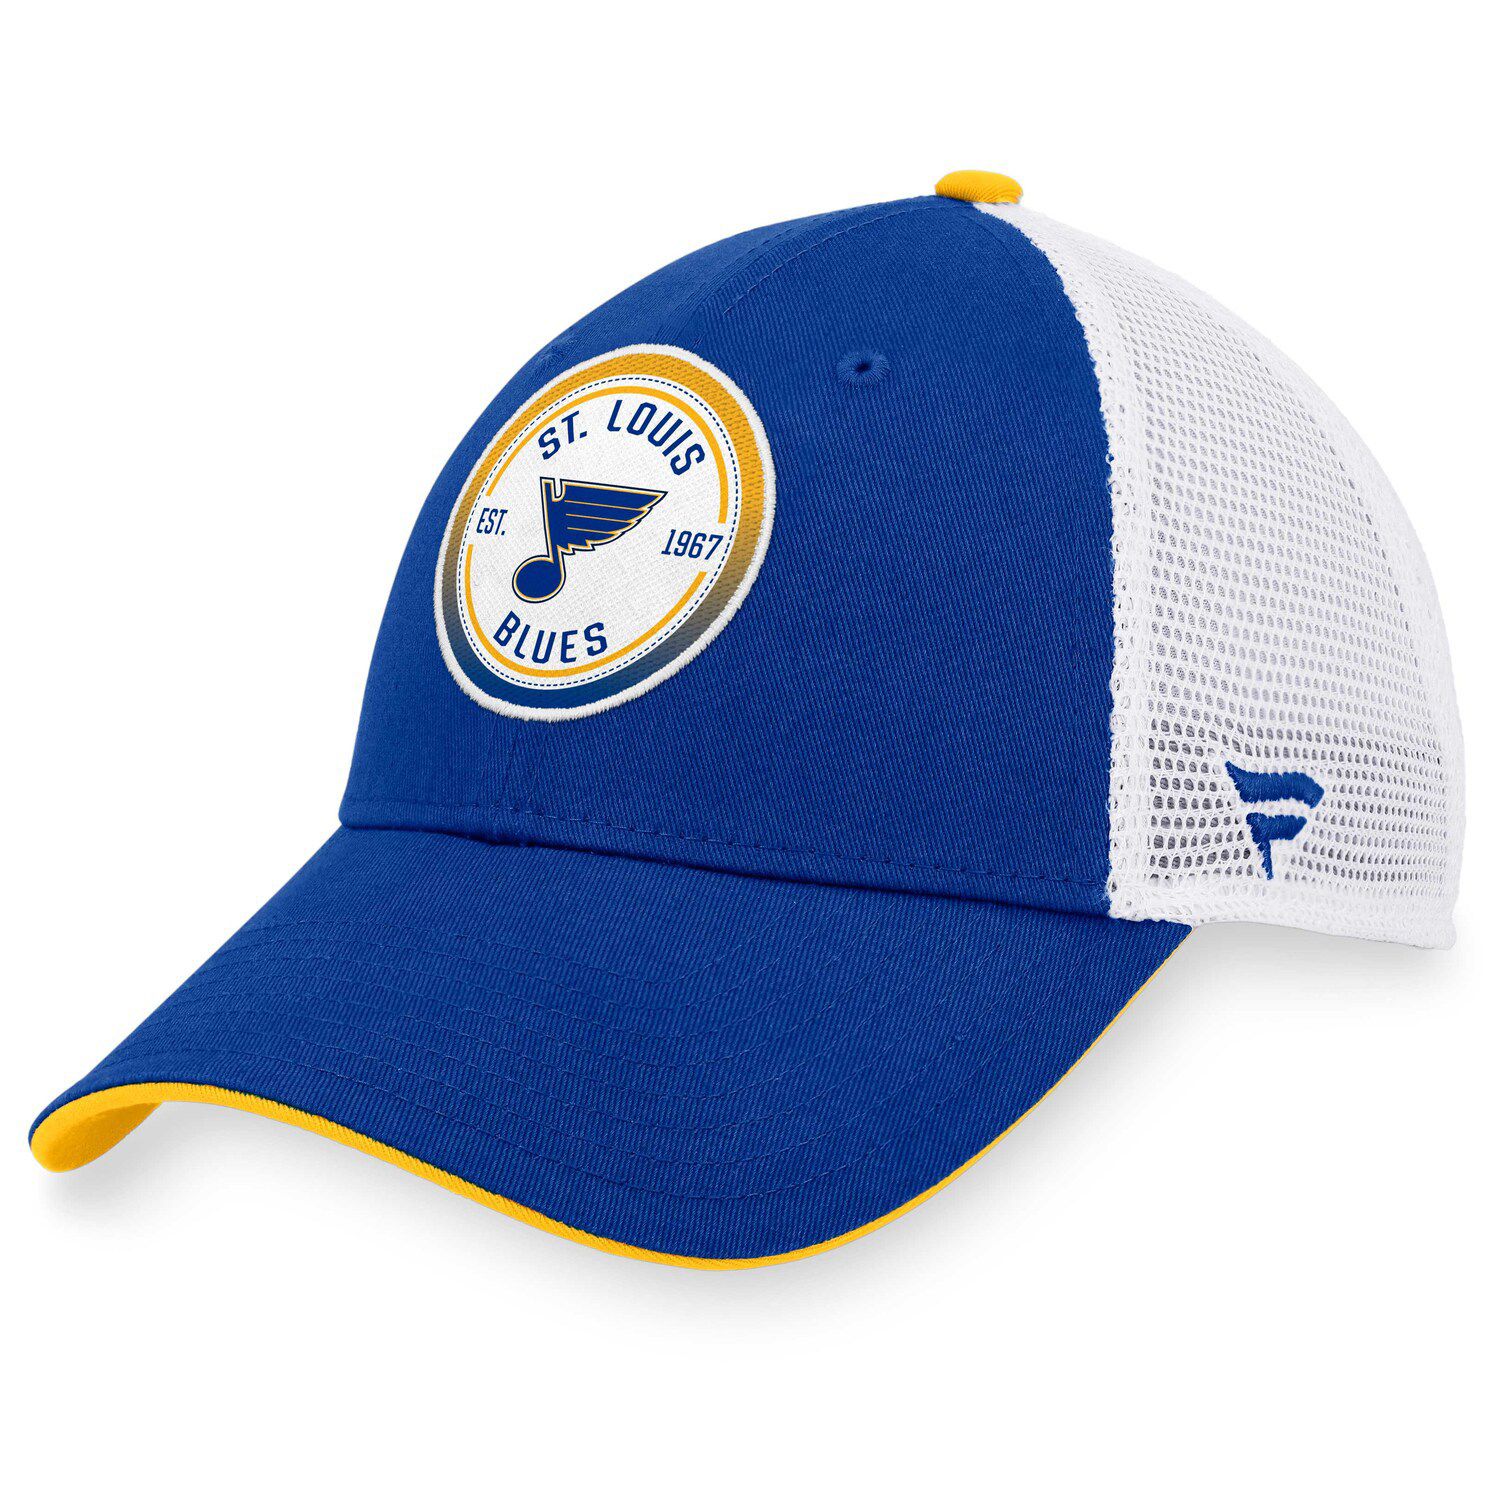 Men's Adidas Blue St. Louis Blues Locker Room Adjustable Hat